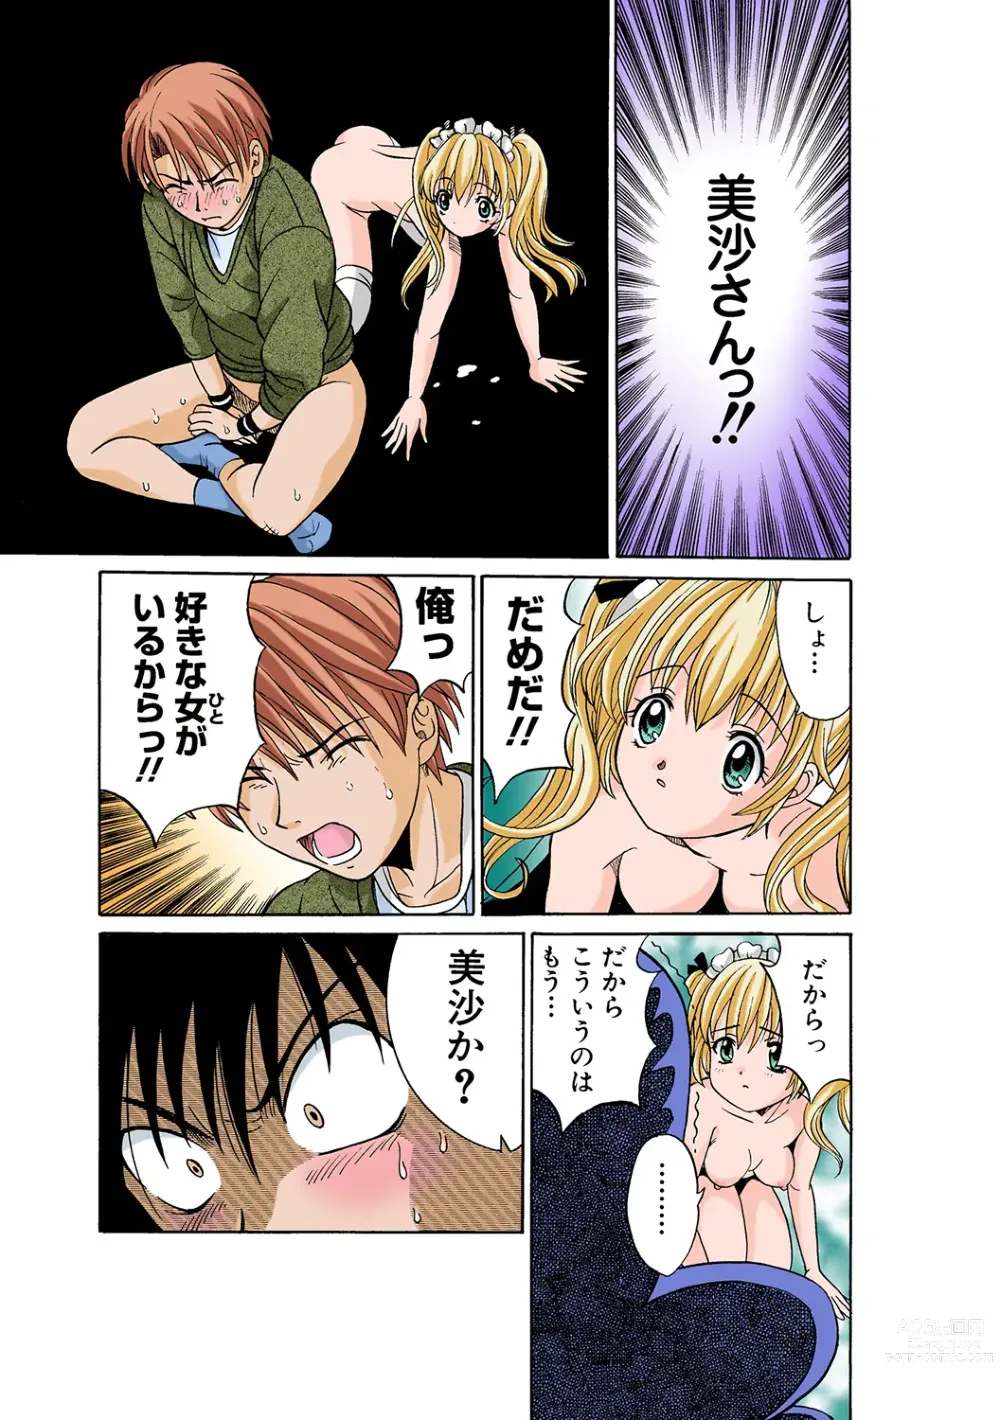 Page 111 of manga HiME-Mania Vol. 44